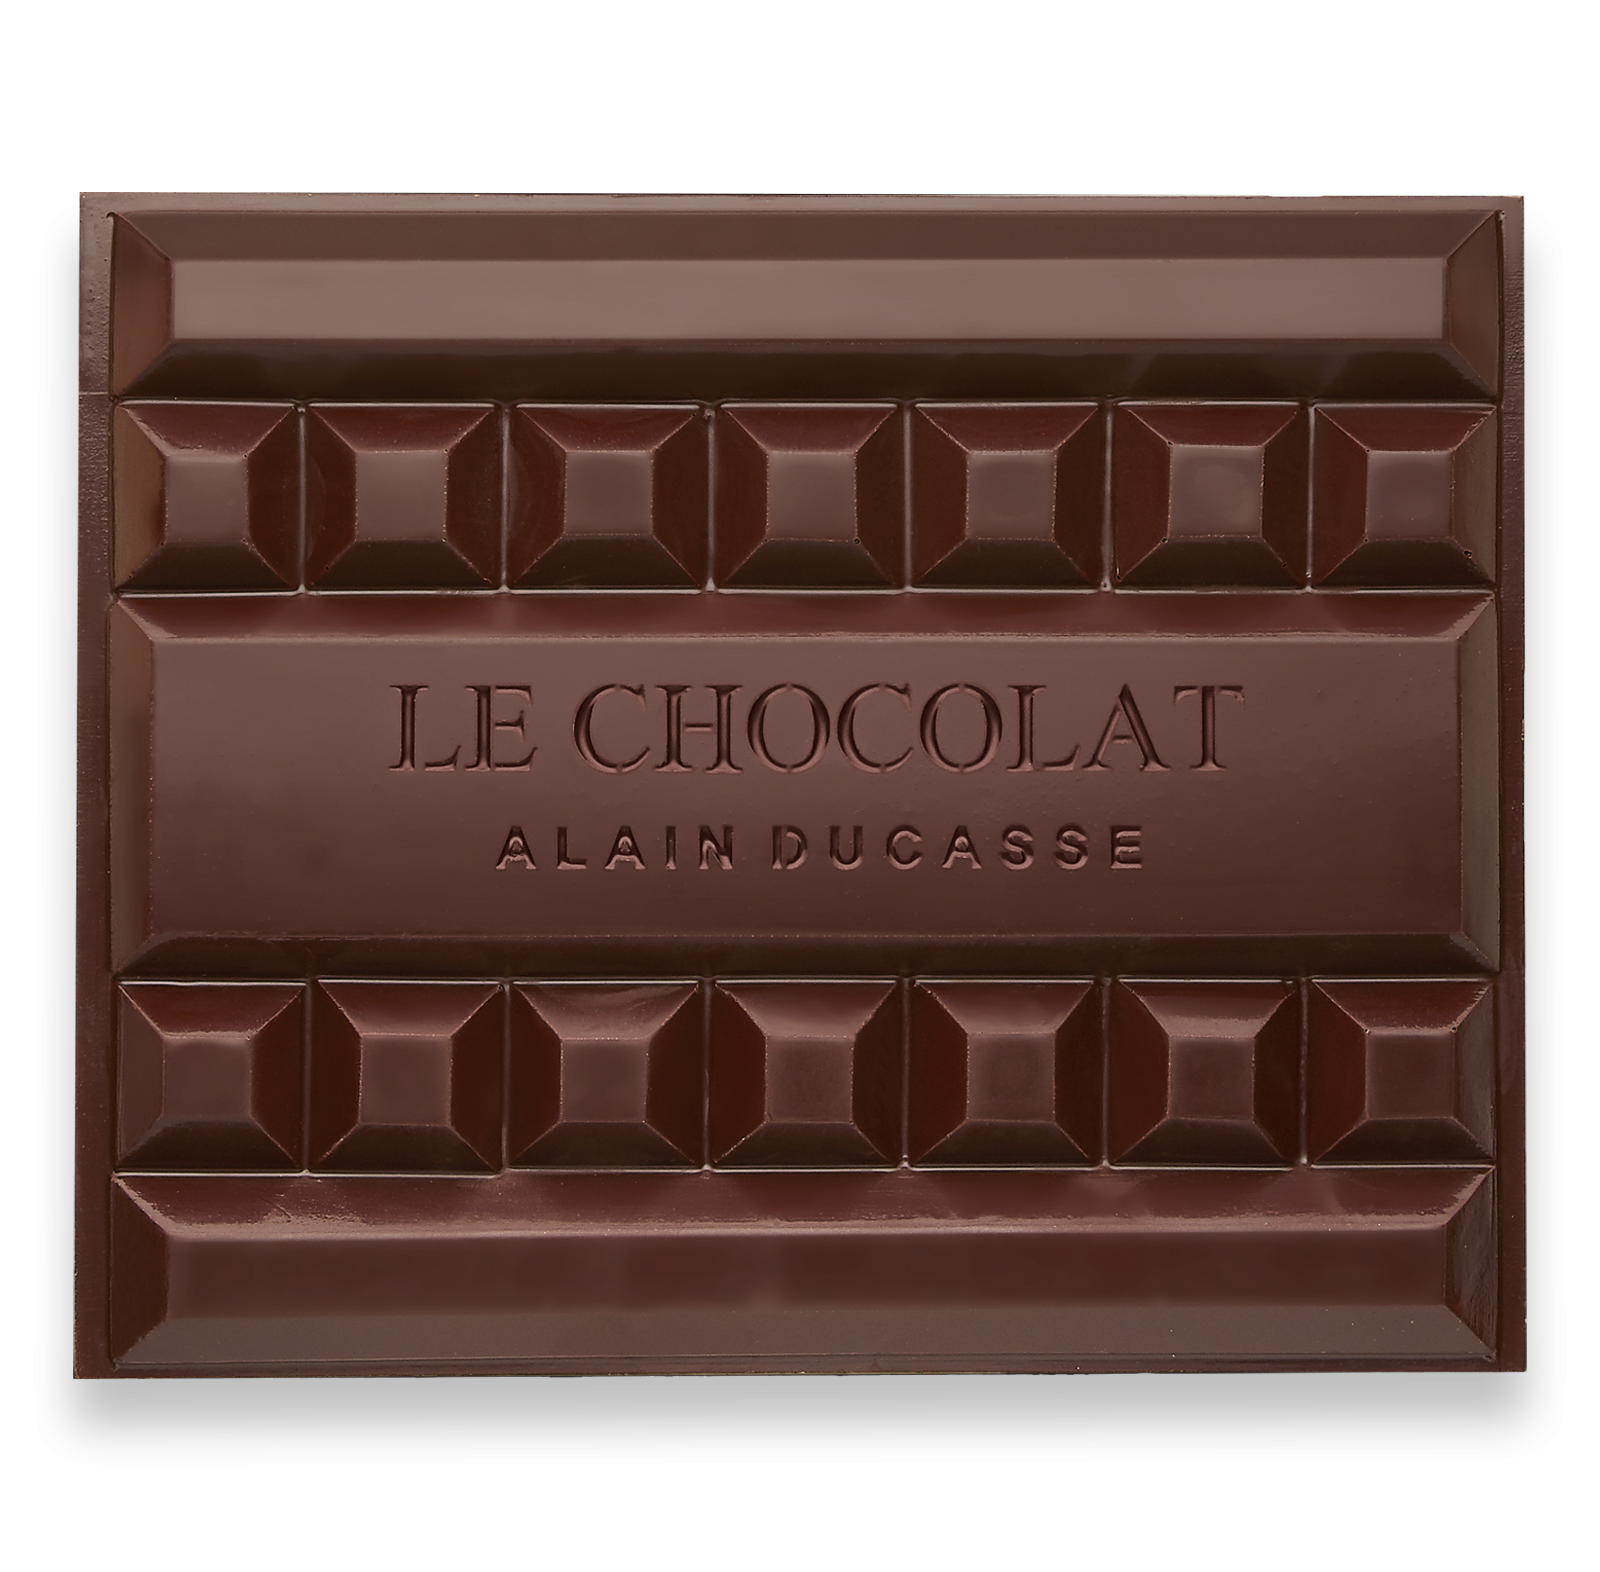 Giant Chocolate bar